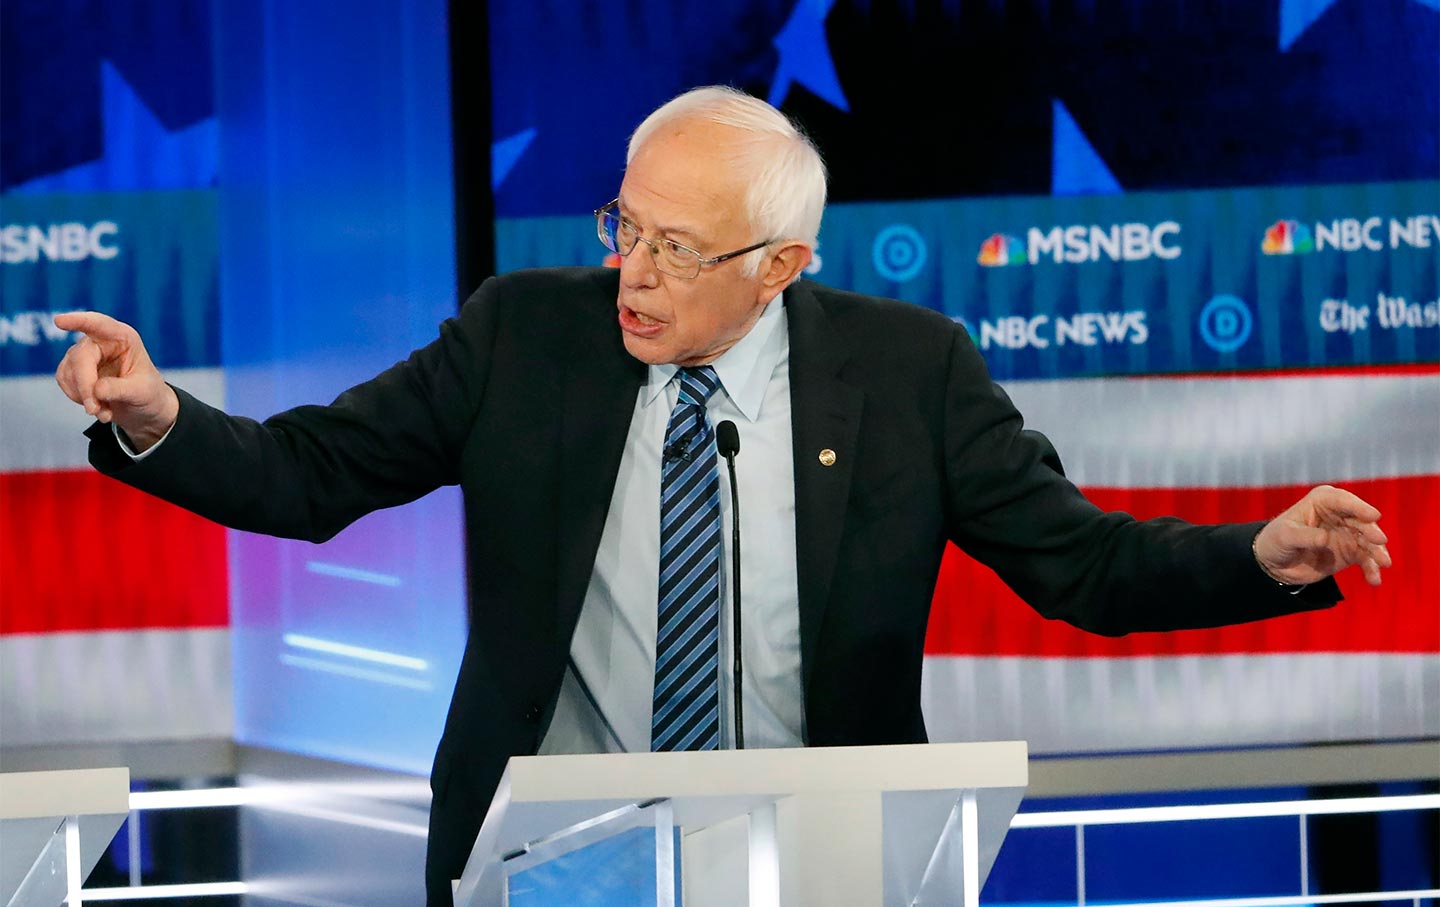 Bernie Sanders Wins the Foreign Policy Debate